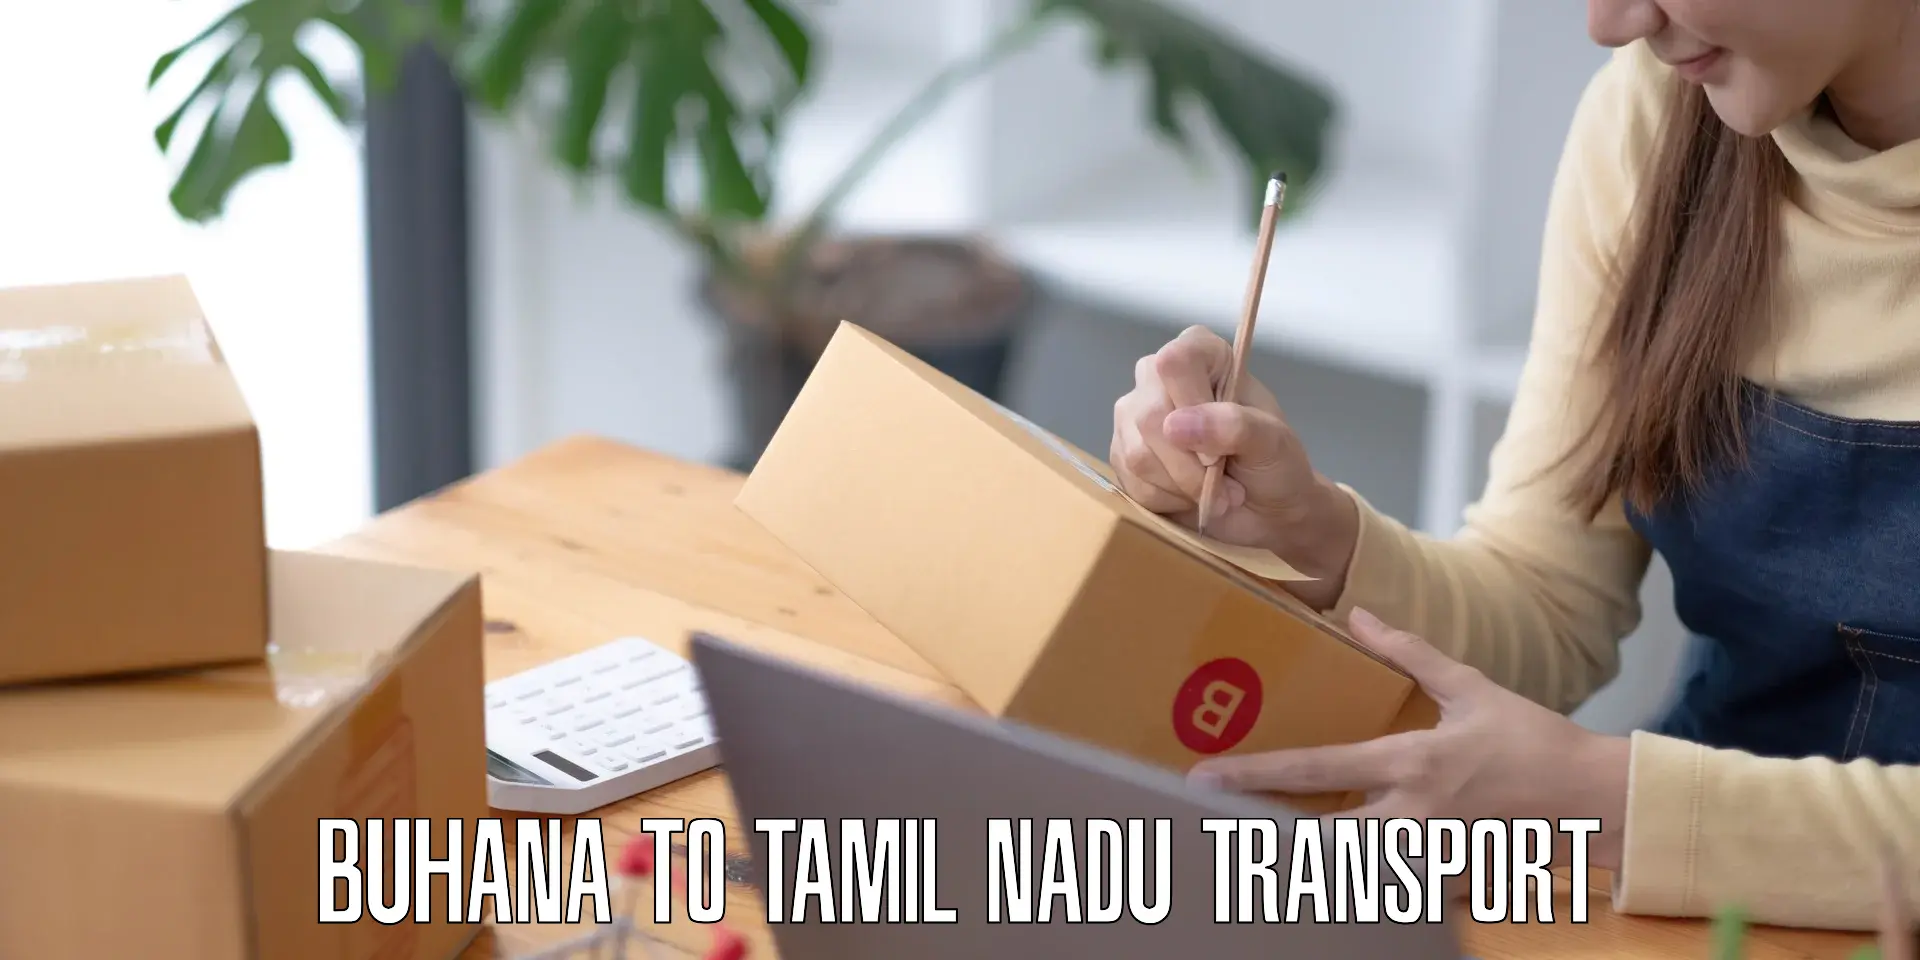 Daily transport service Buhana to Tamil Nadu